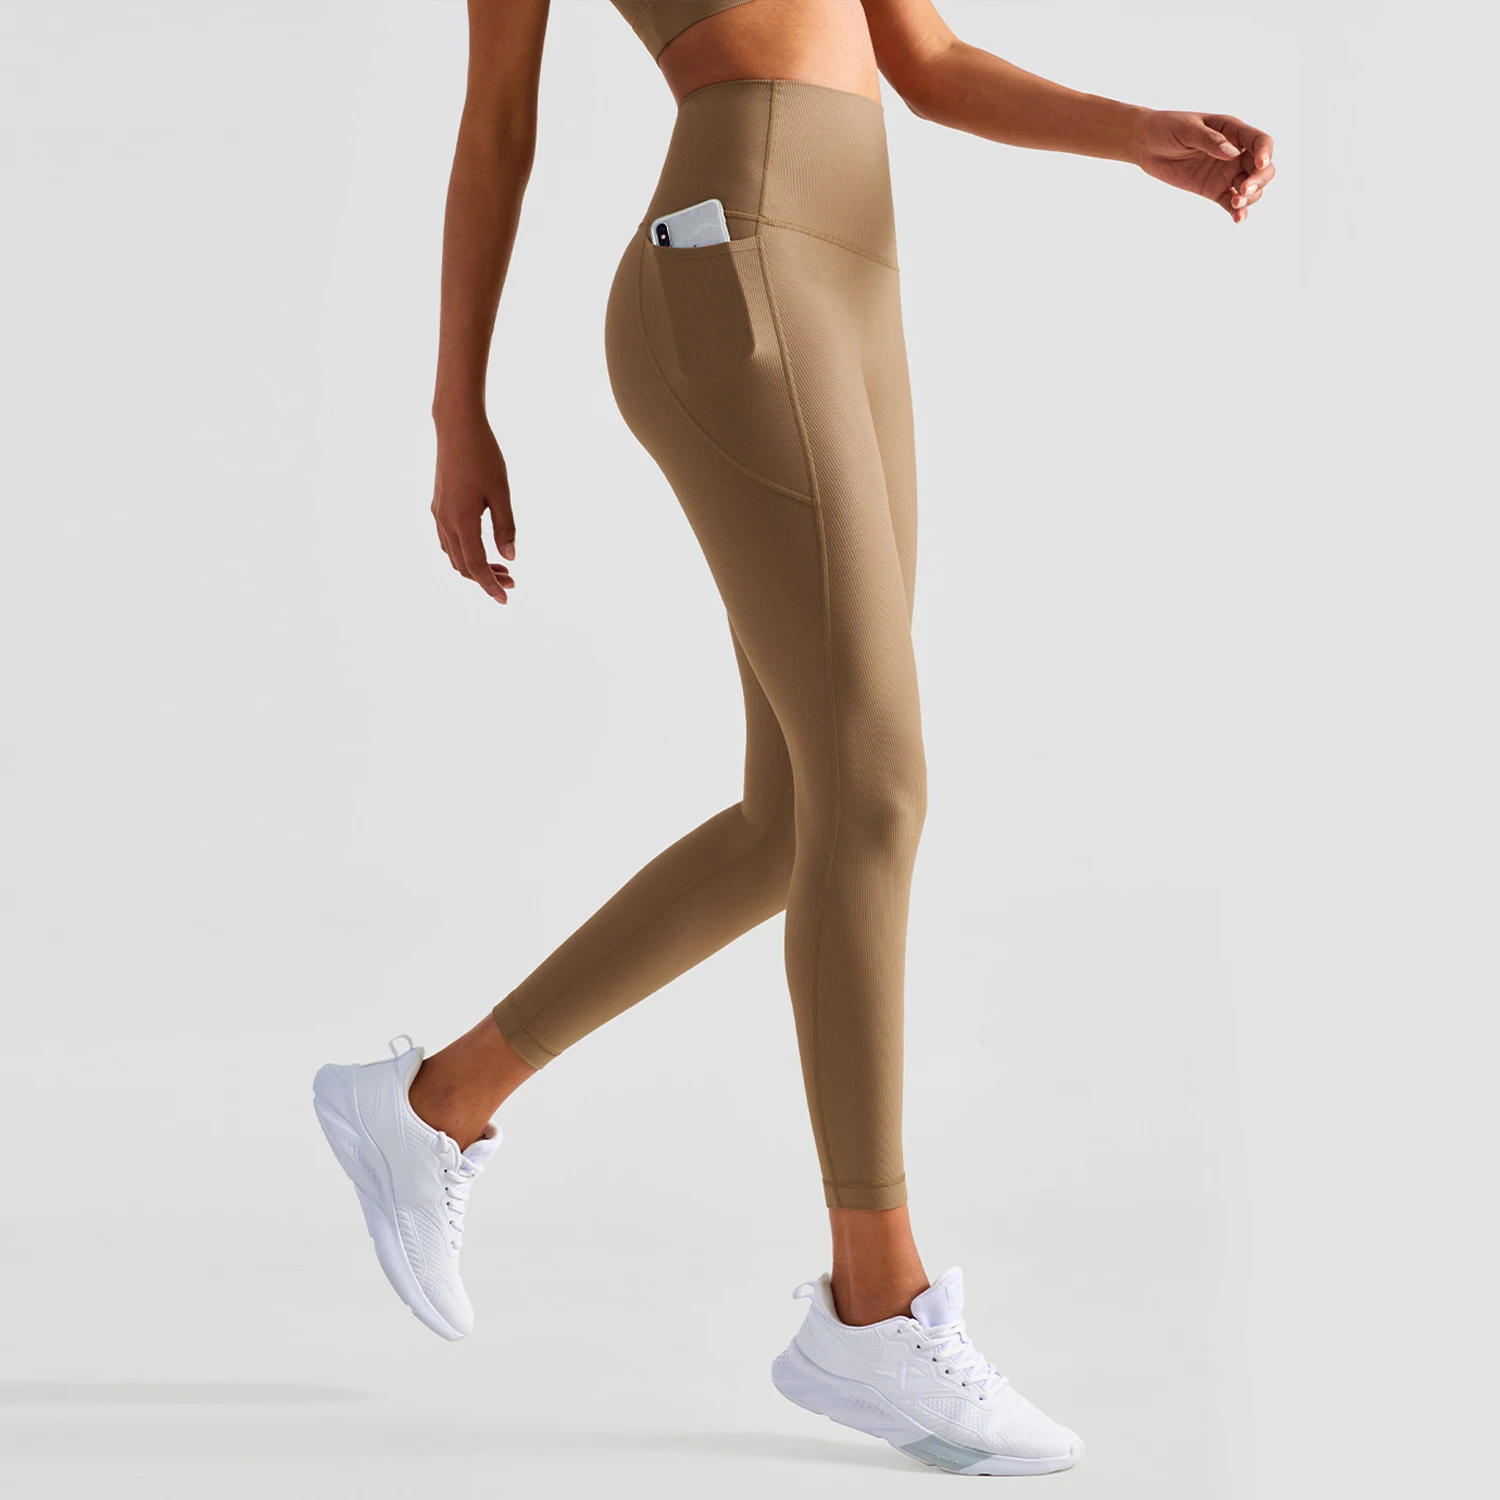 

LULUNALAN Women's Pants Yoga Woman Naked Sport Seamless Leggings Gym Workout Fitness Breathable Rib High Waist Tights Sweatpants